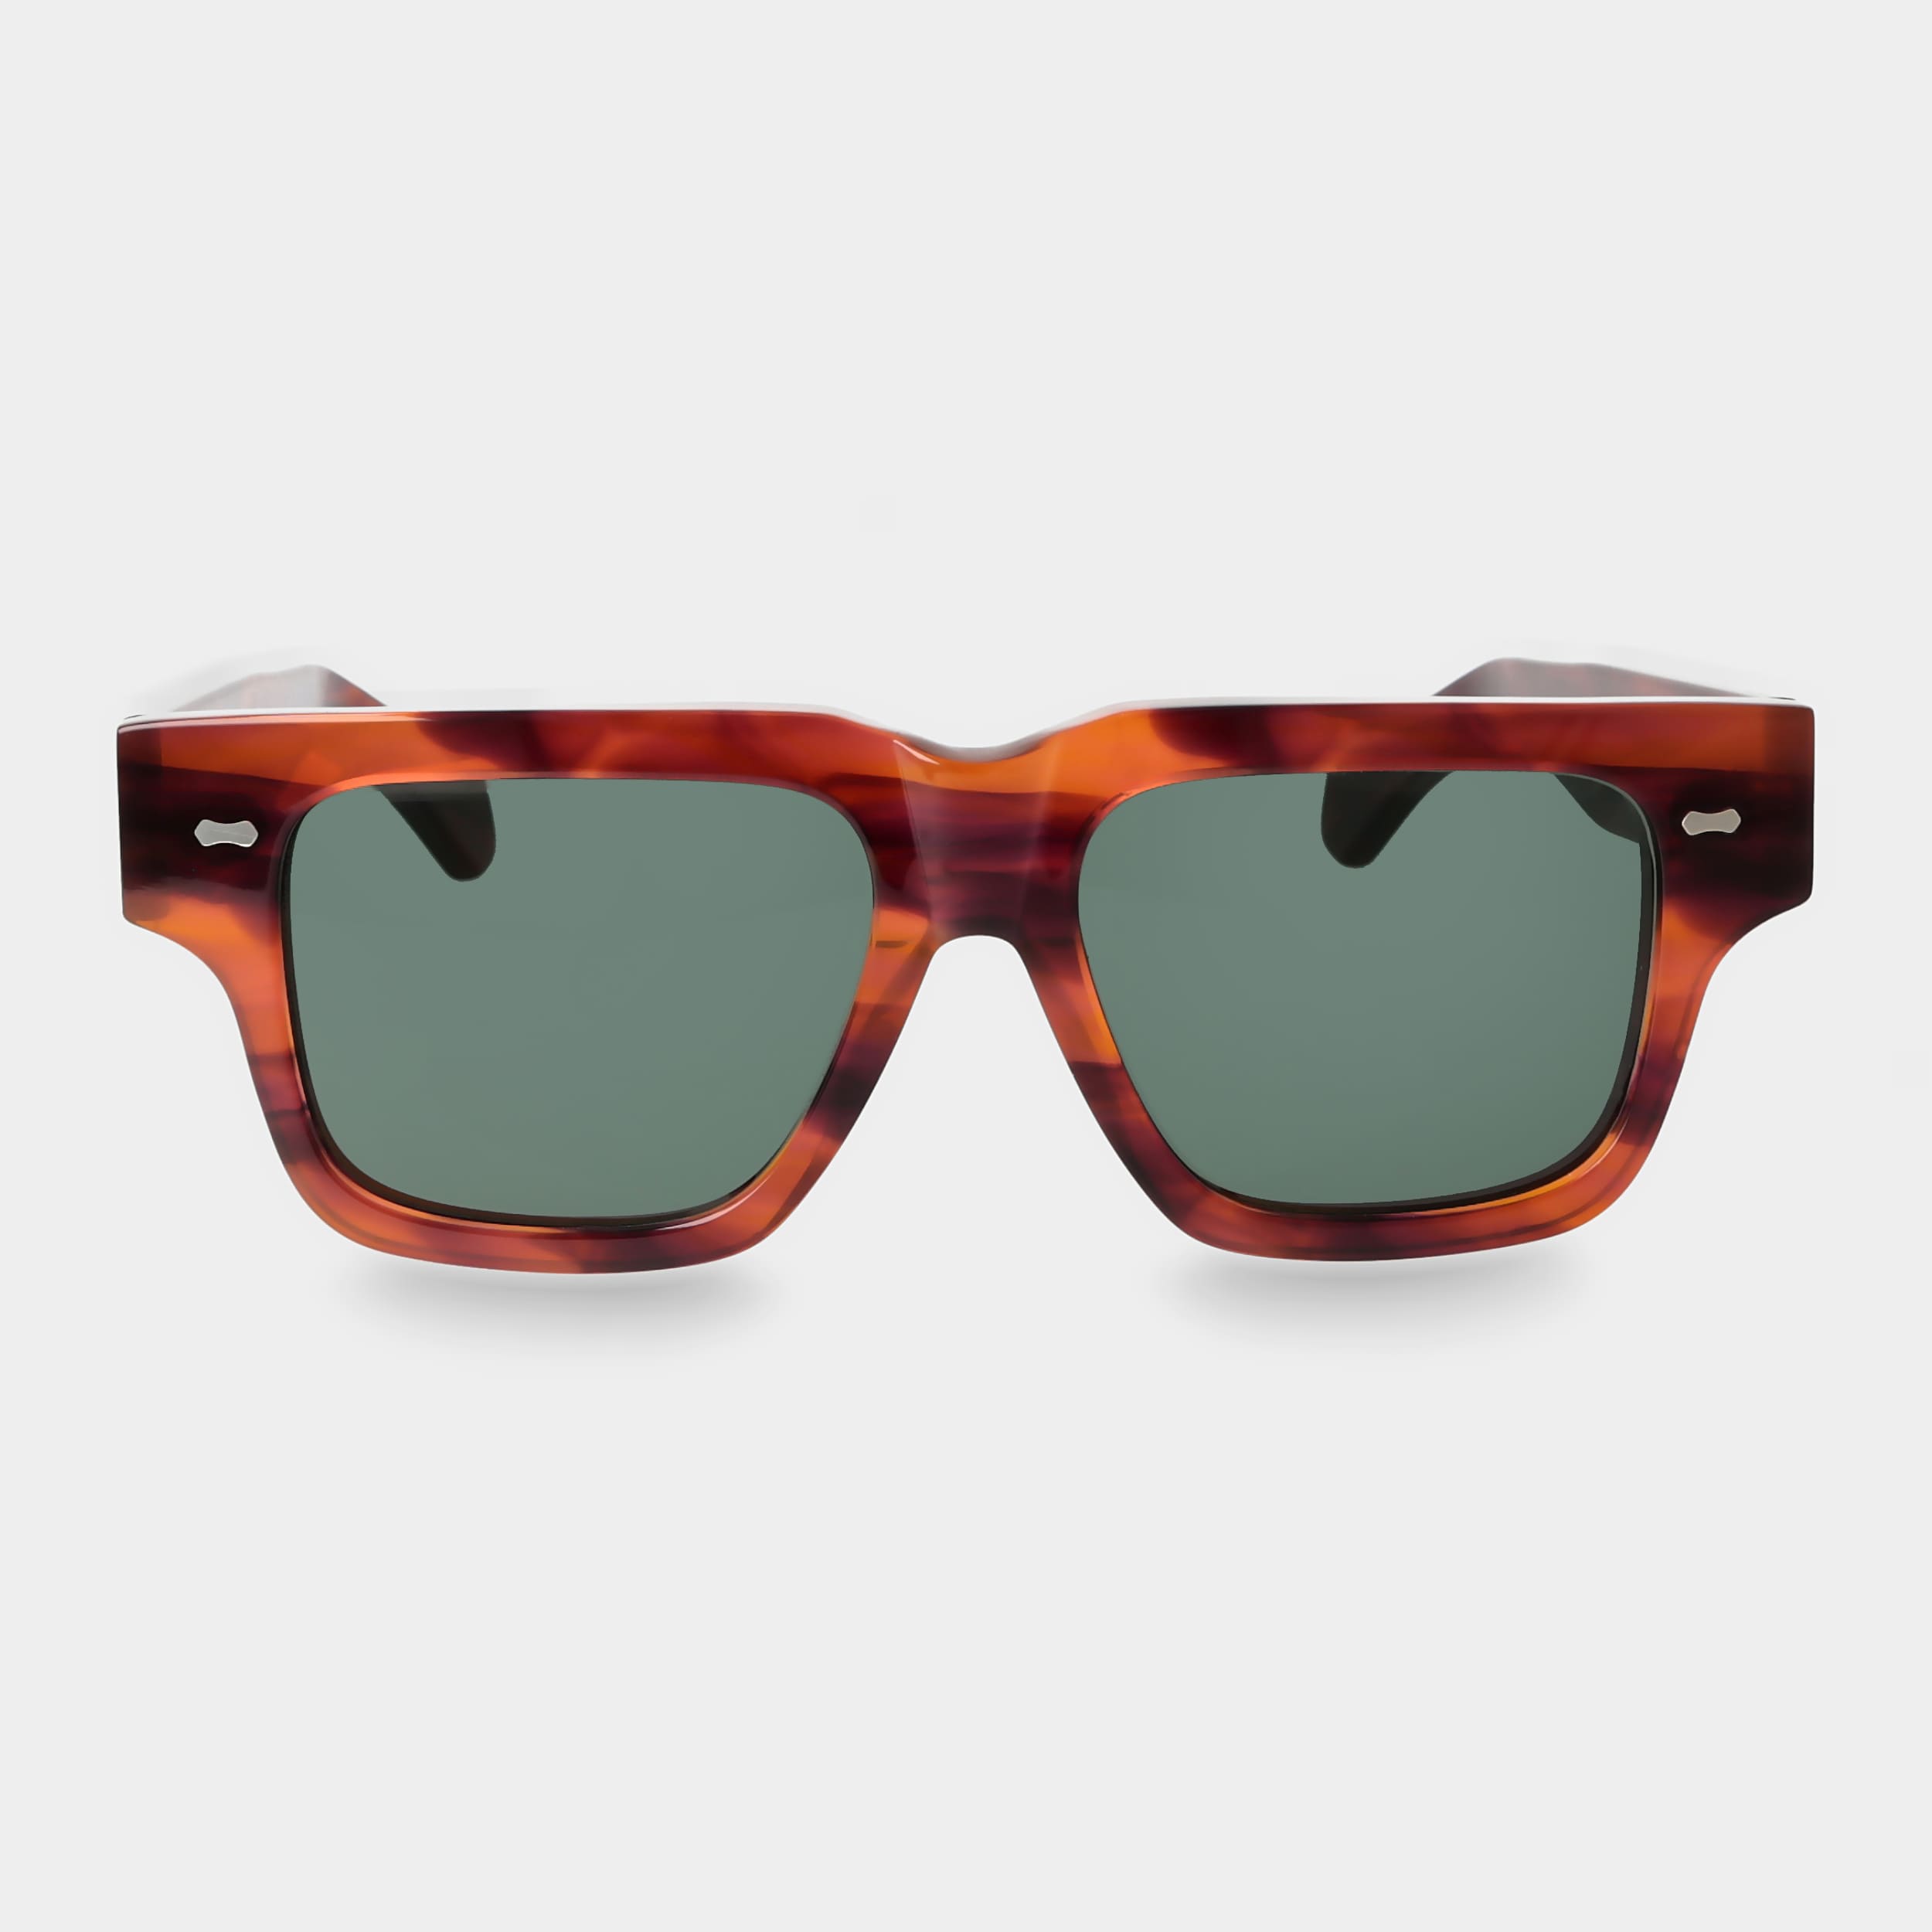 sunglasses-tela-eco-havana-bottle-green-sustainable-tbd-eyewear-front